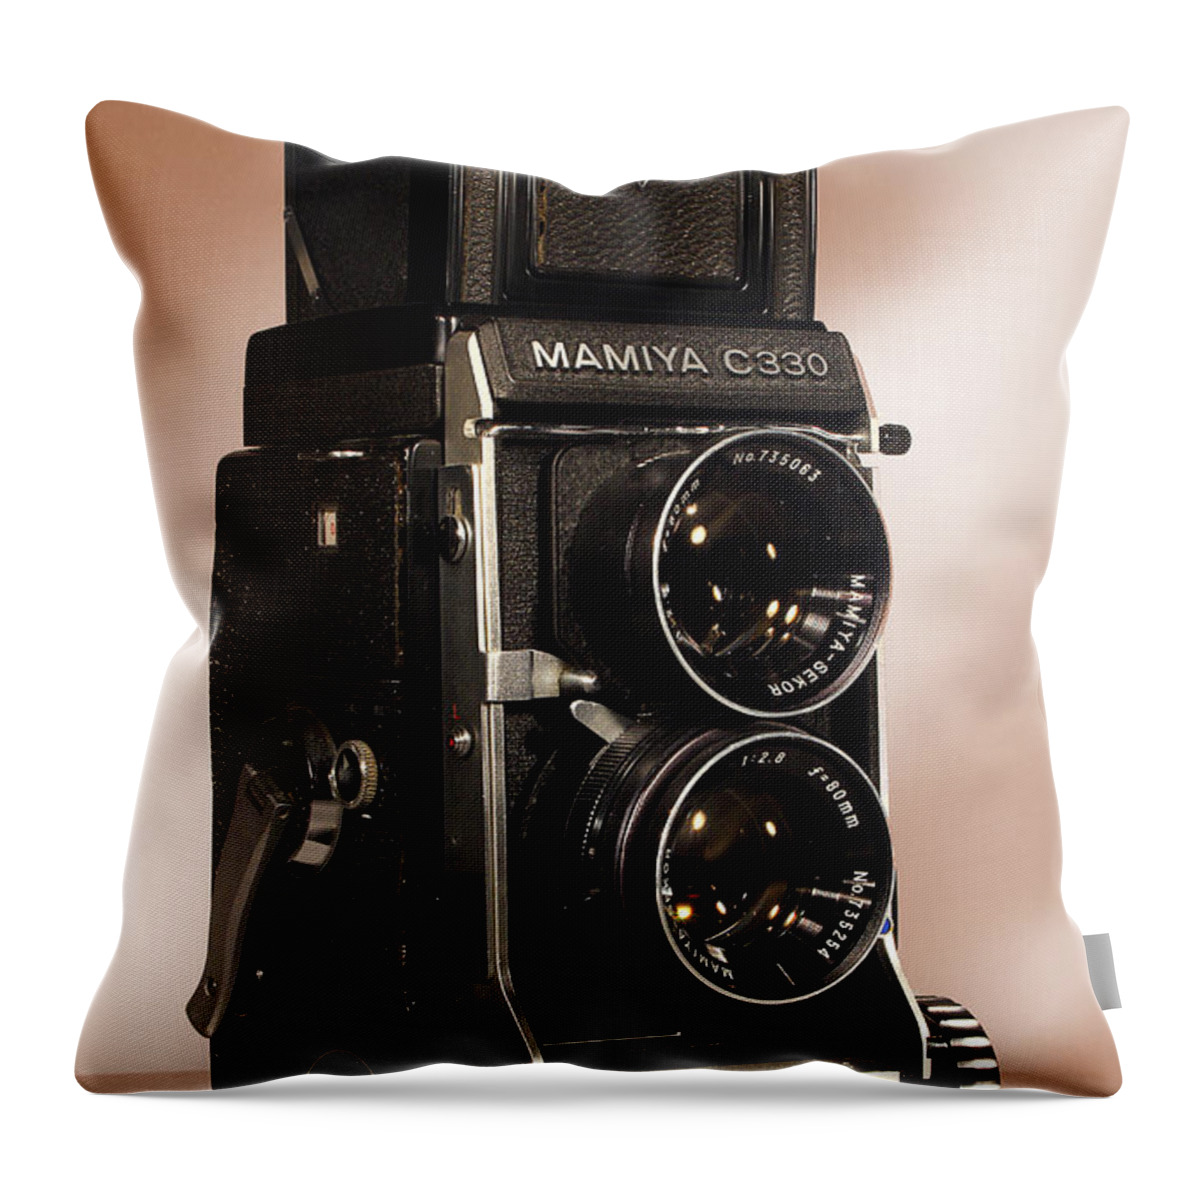 Mamiya C330 Throw Pillow featuring the photograph Mamiya C330 by Michael Eingle